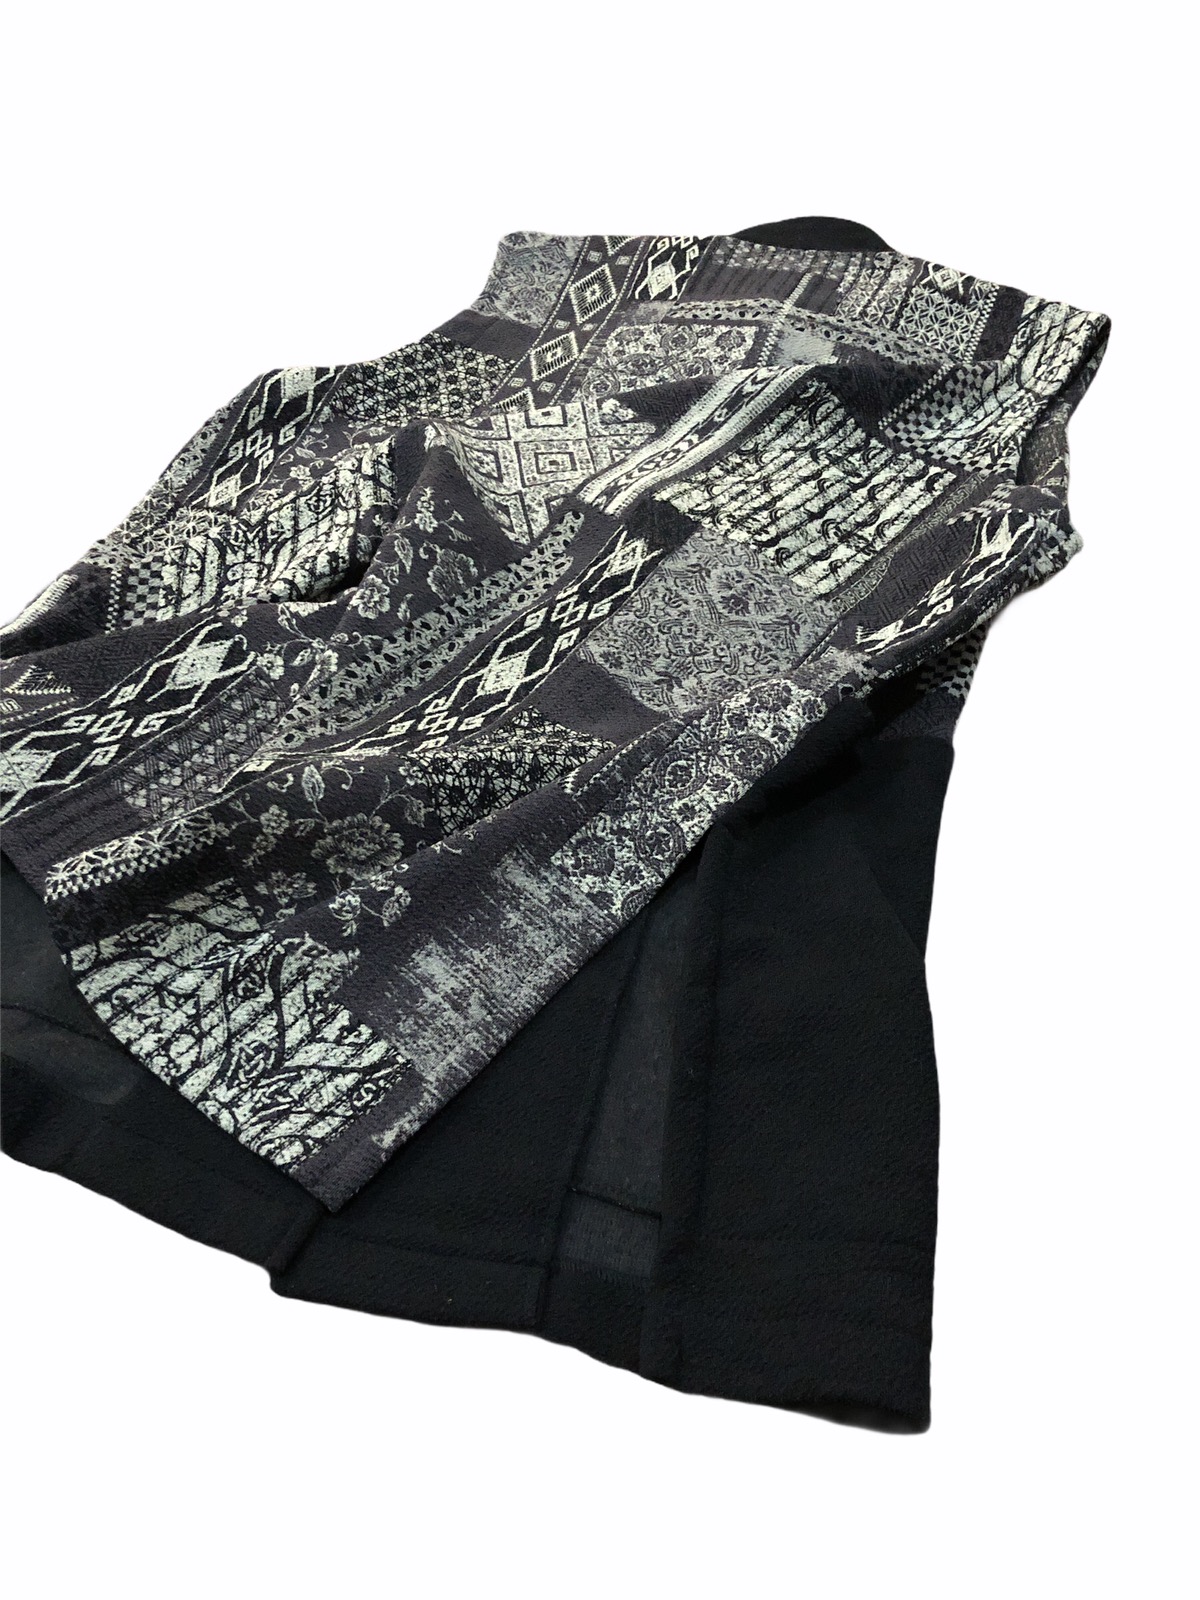 Japanese Brand - Japanese Traditional Vest Abstract Jacket Kapital Design - 3